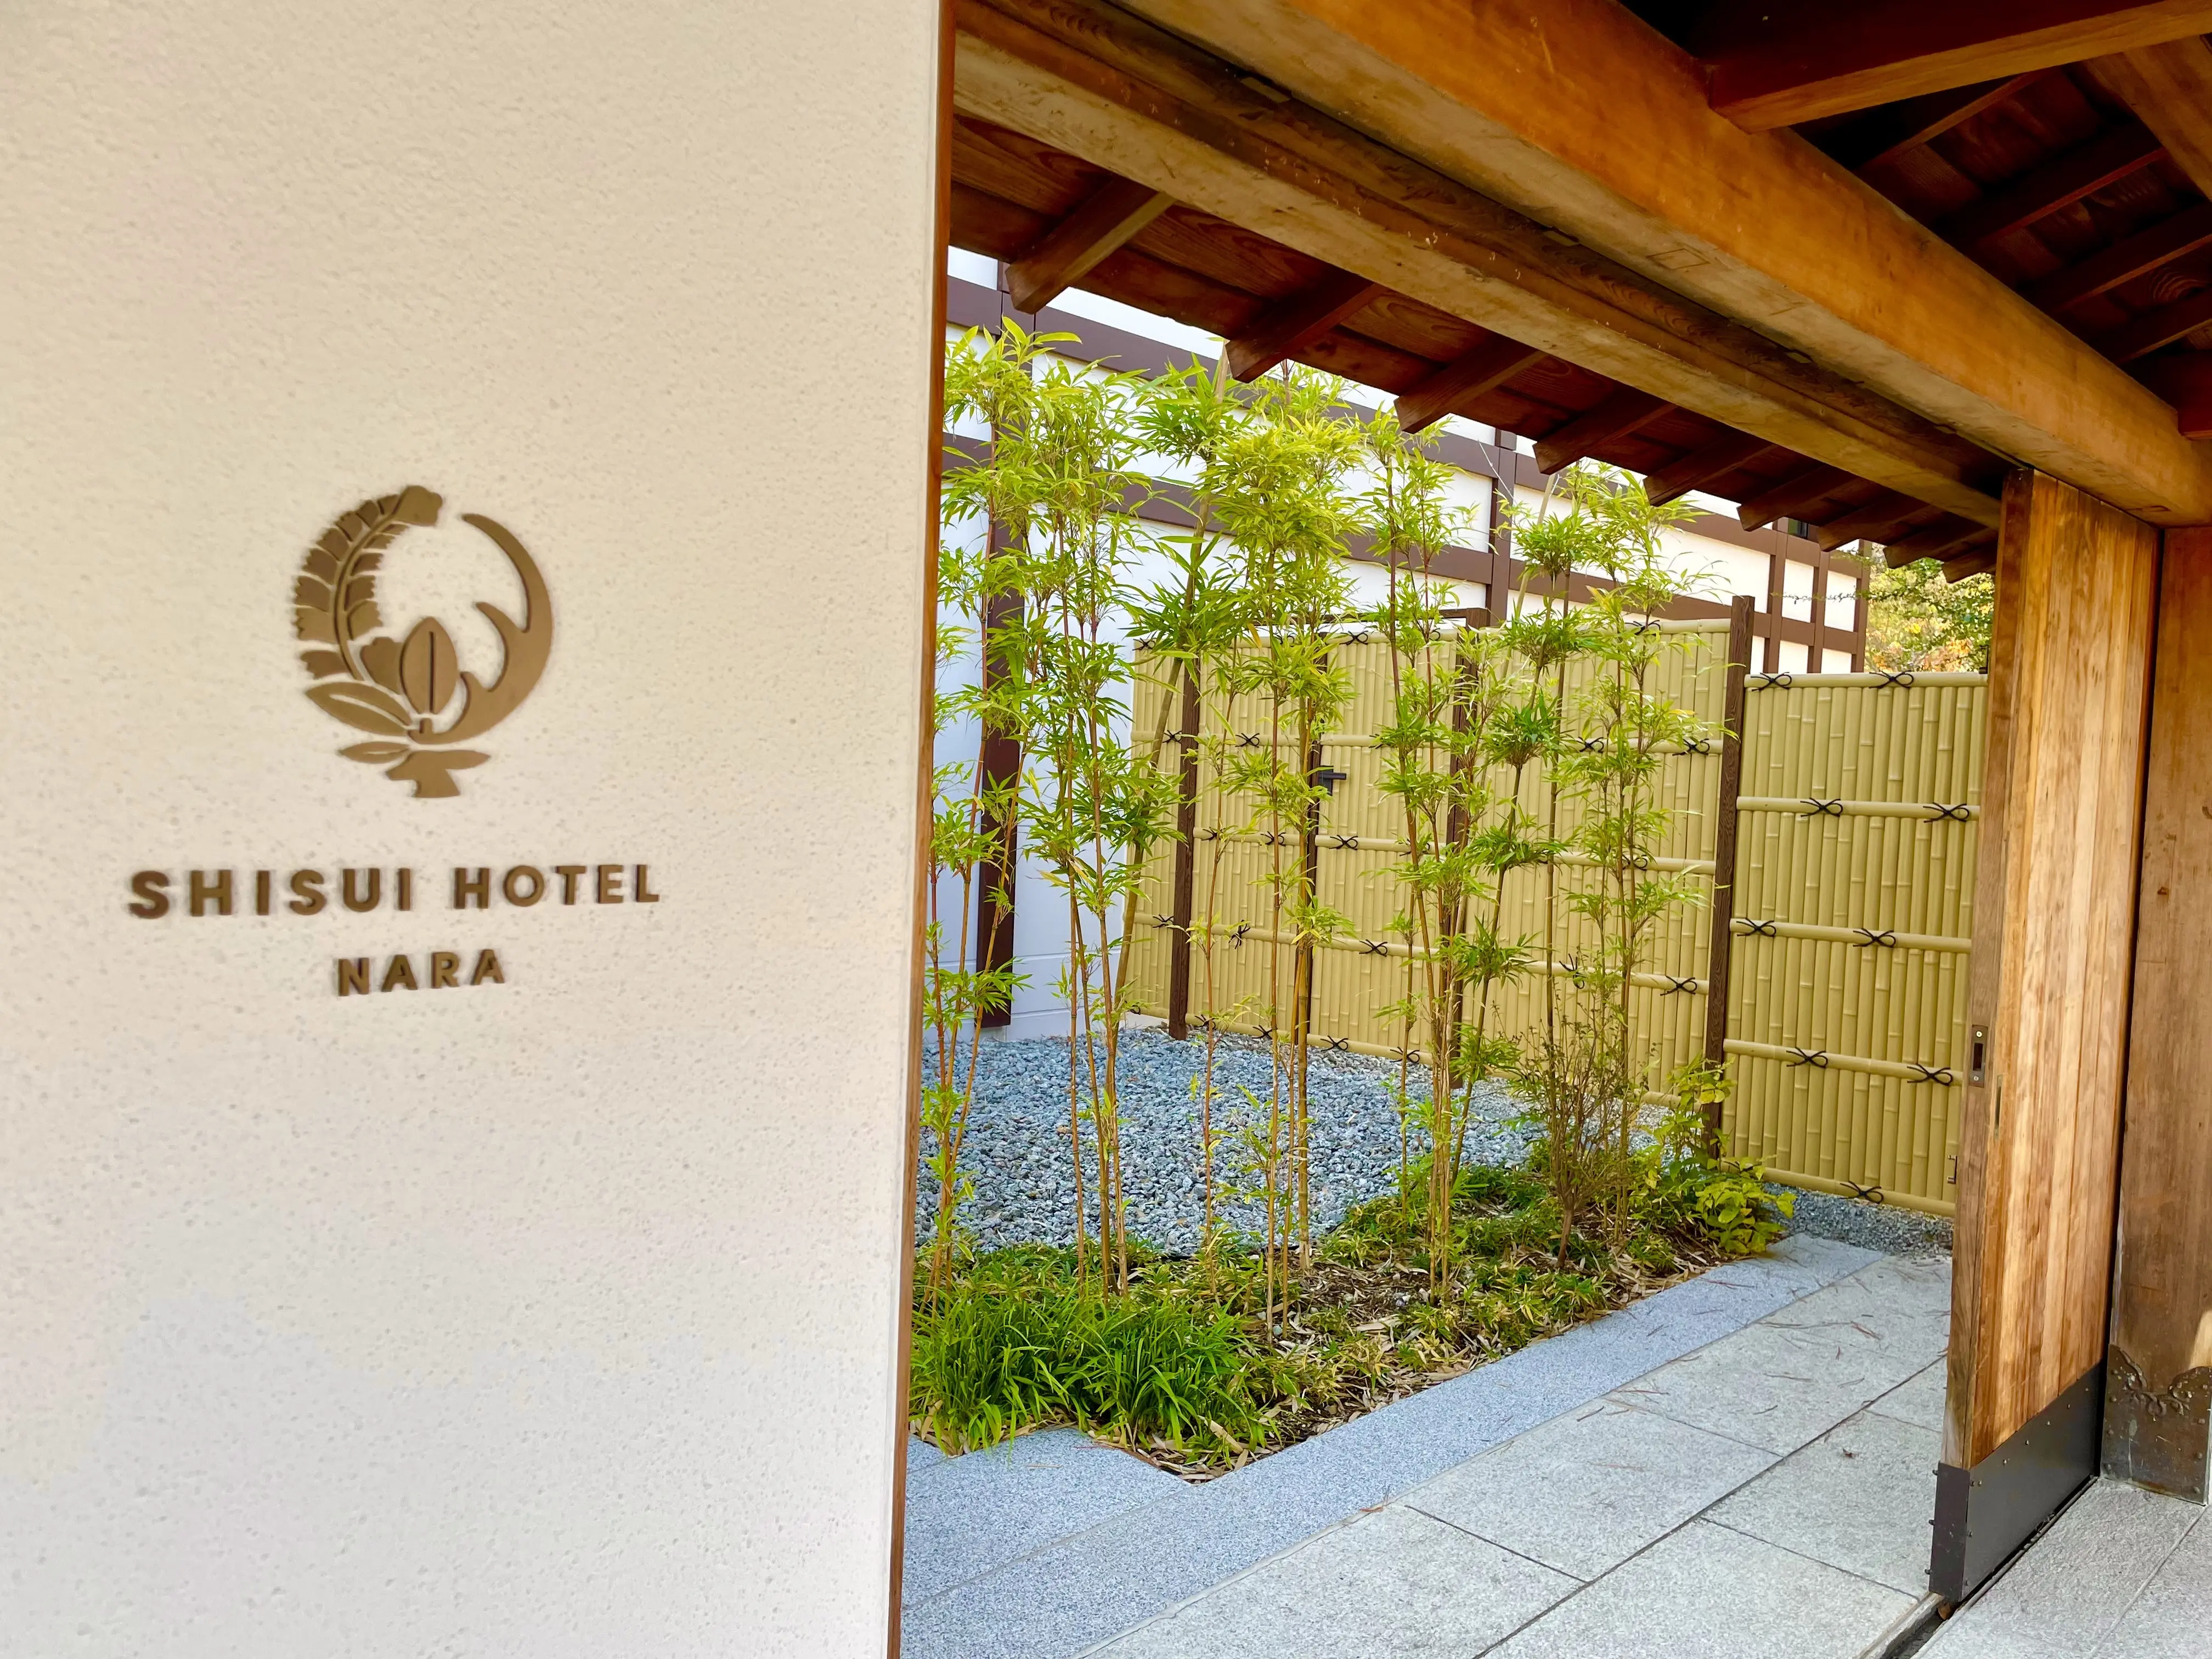 SHISUI HOTEL NARA